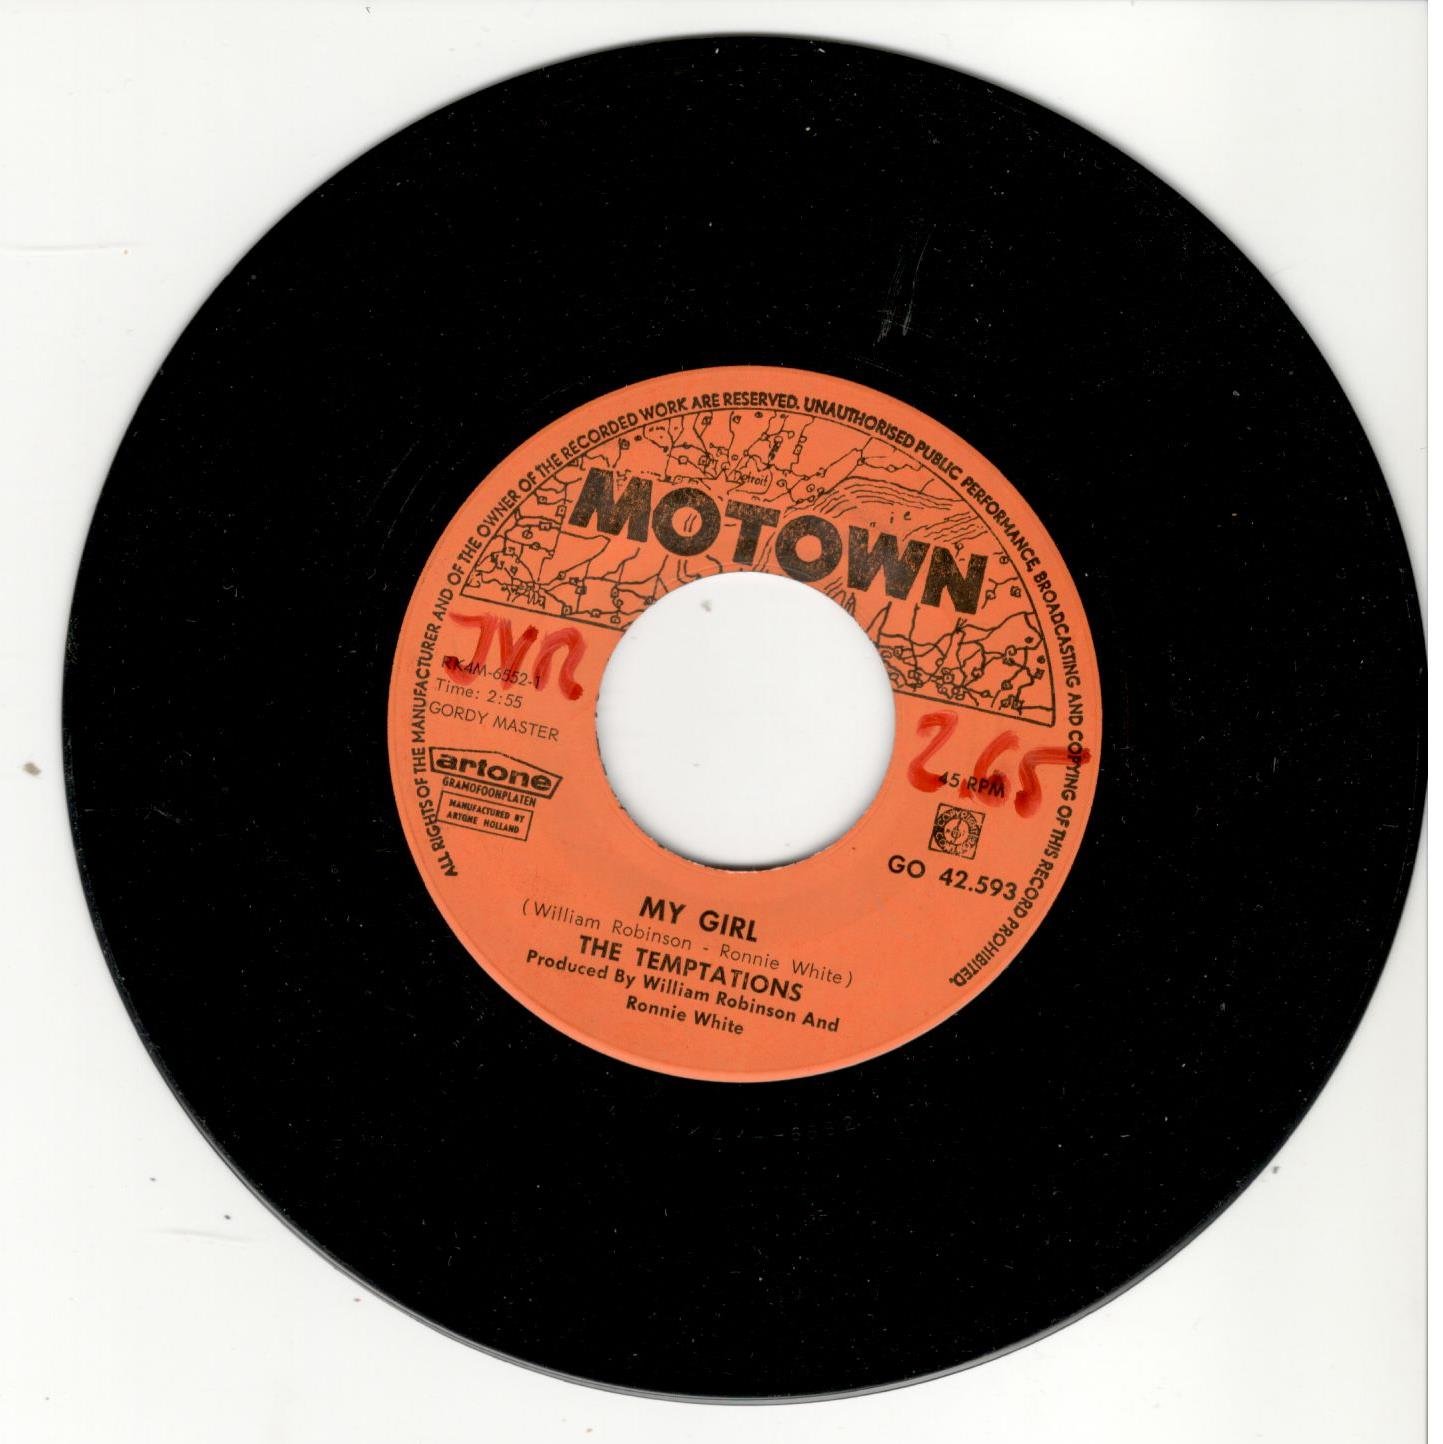 Japanese, Canadian, Dutch and German Tamla Motown 45s - Soul Source